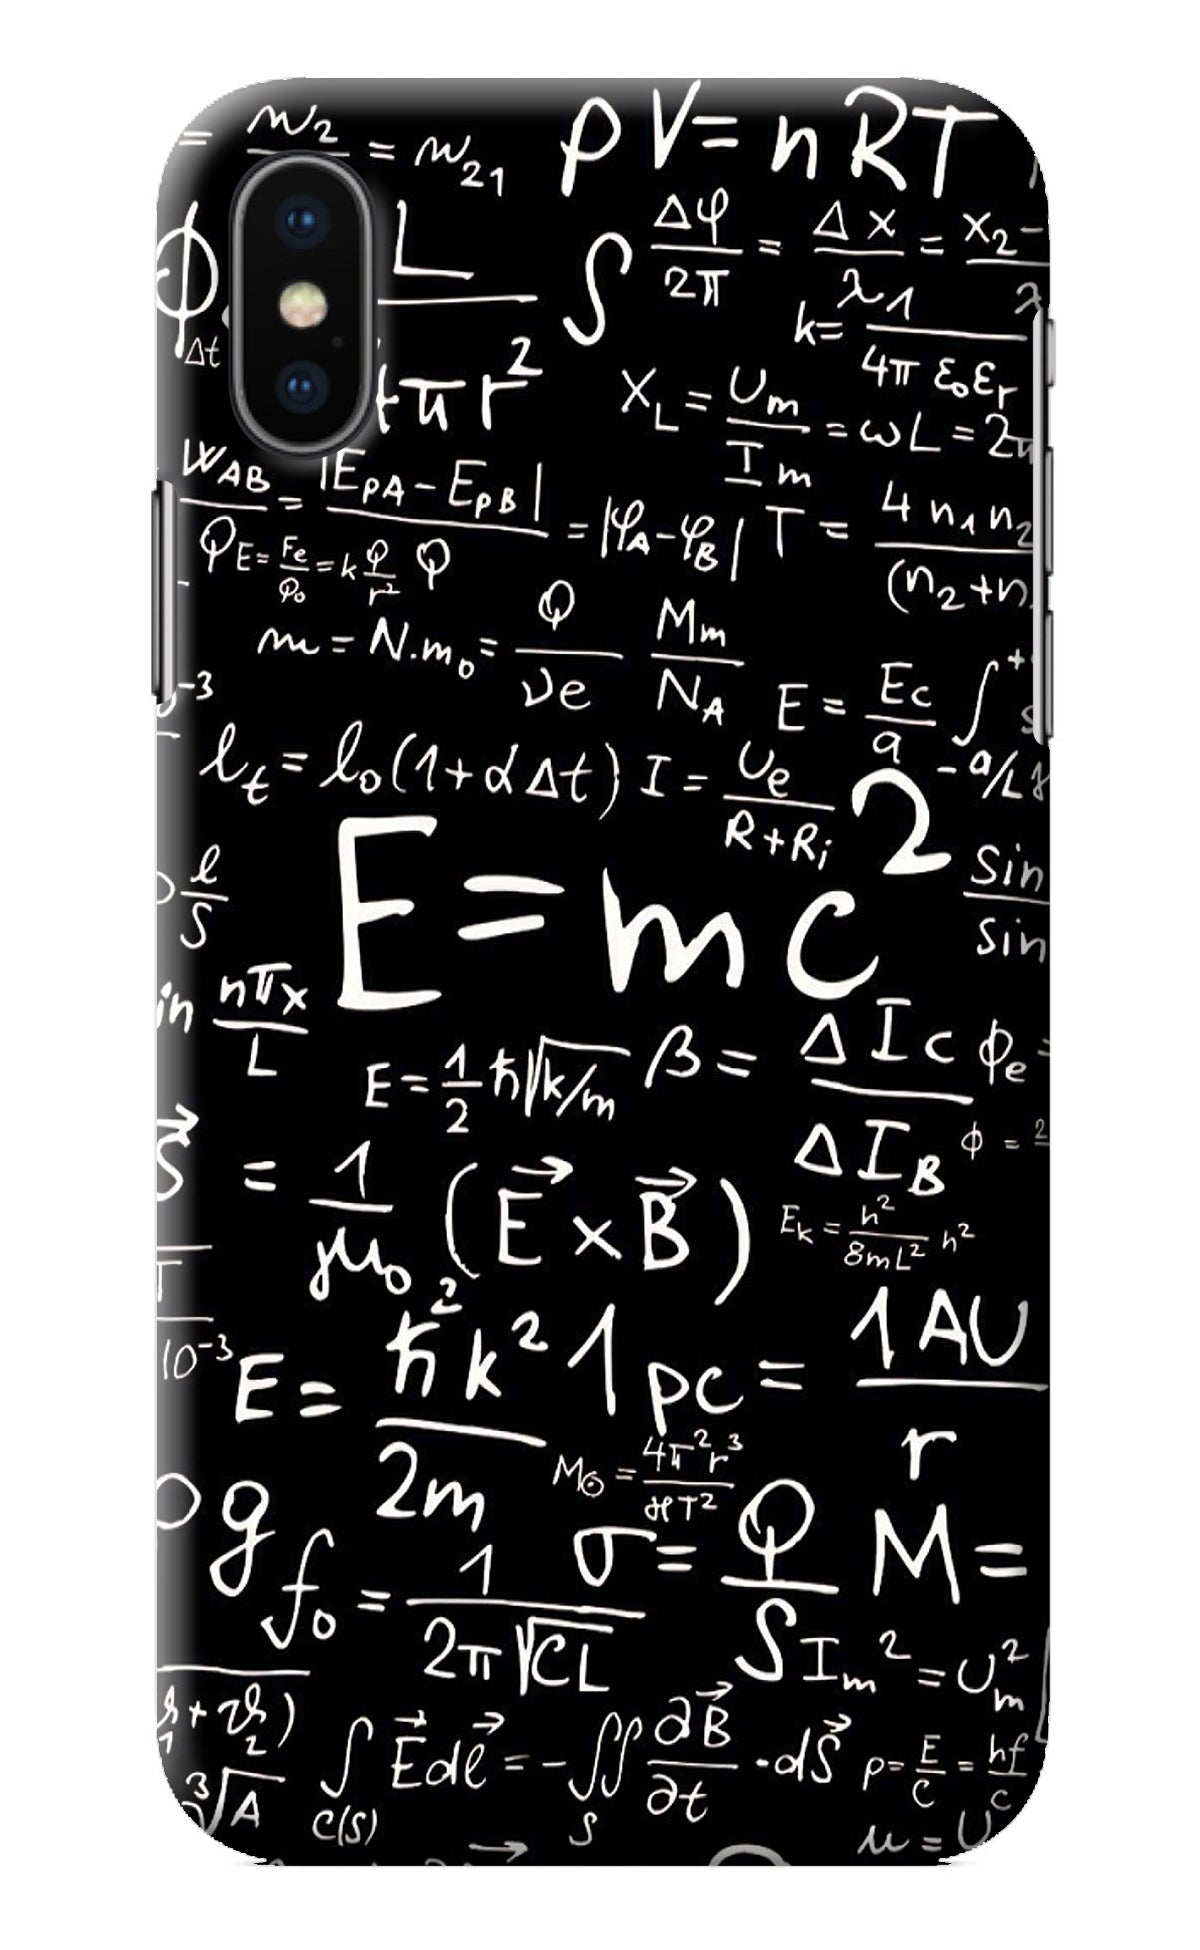 Physics Albert Einstein Formula iPhone X Back Cover